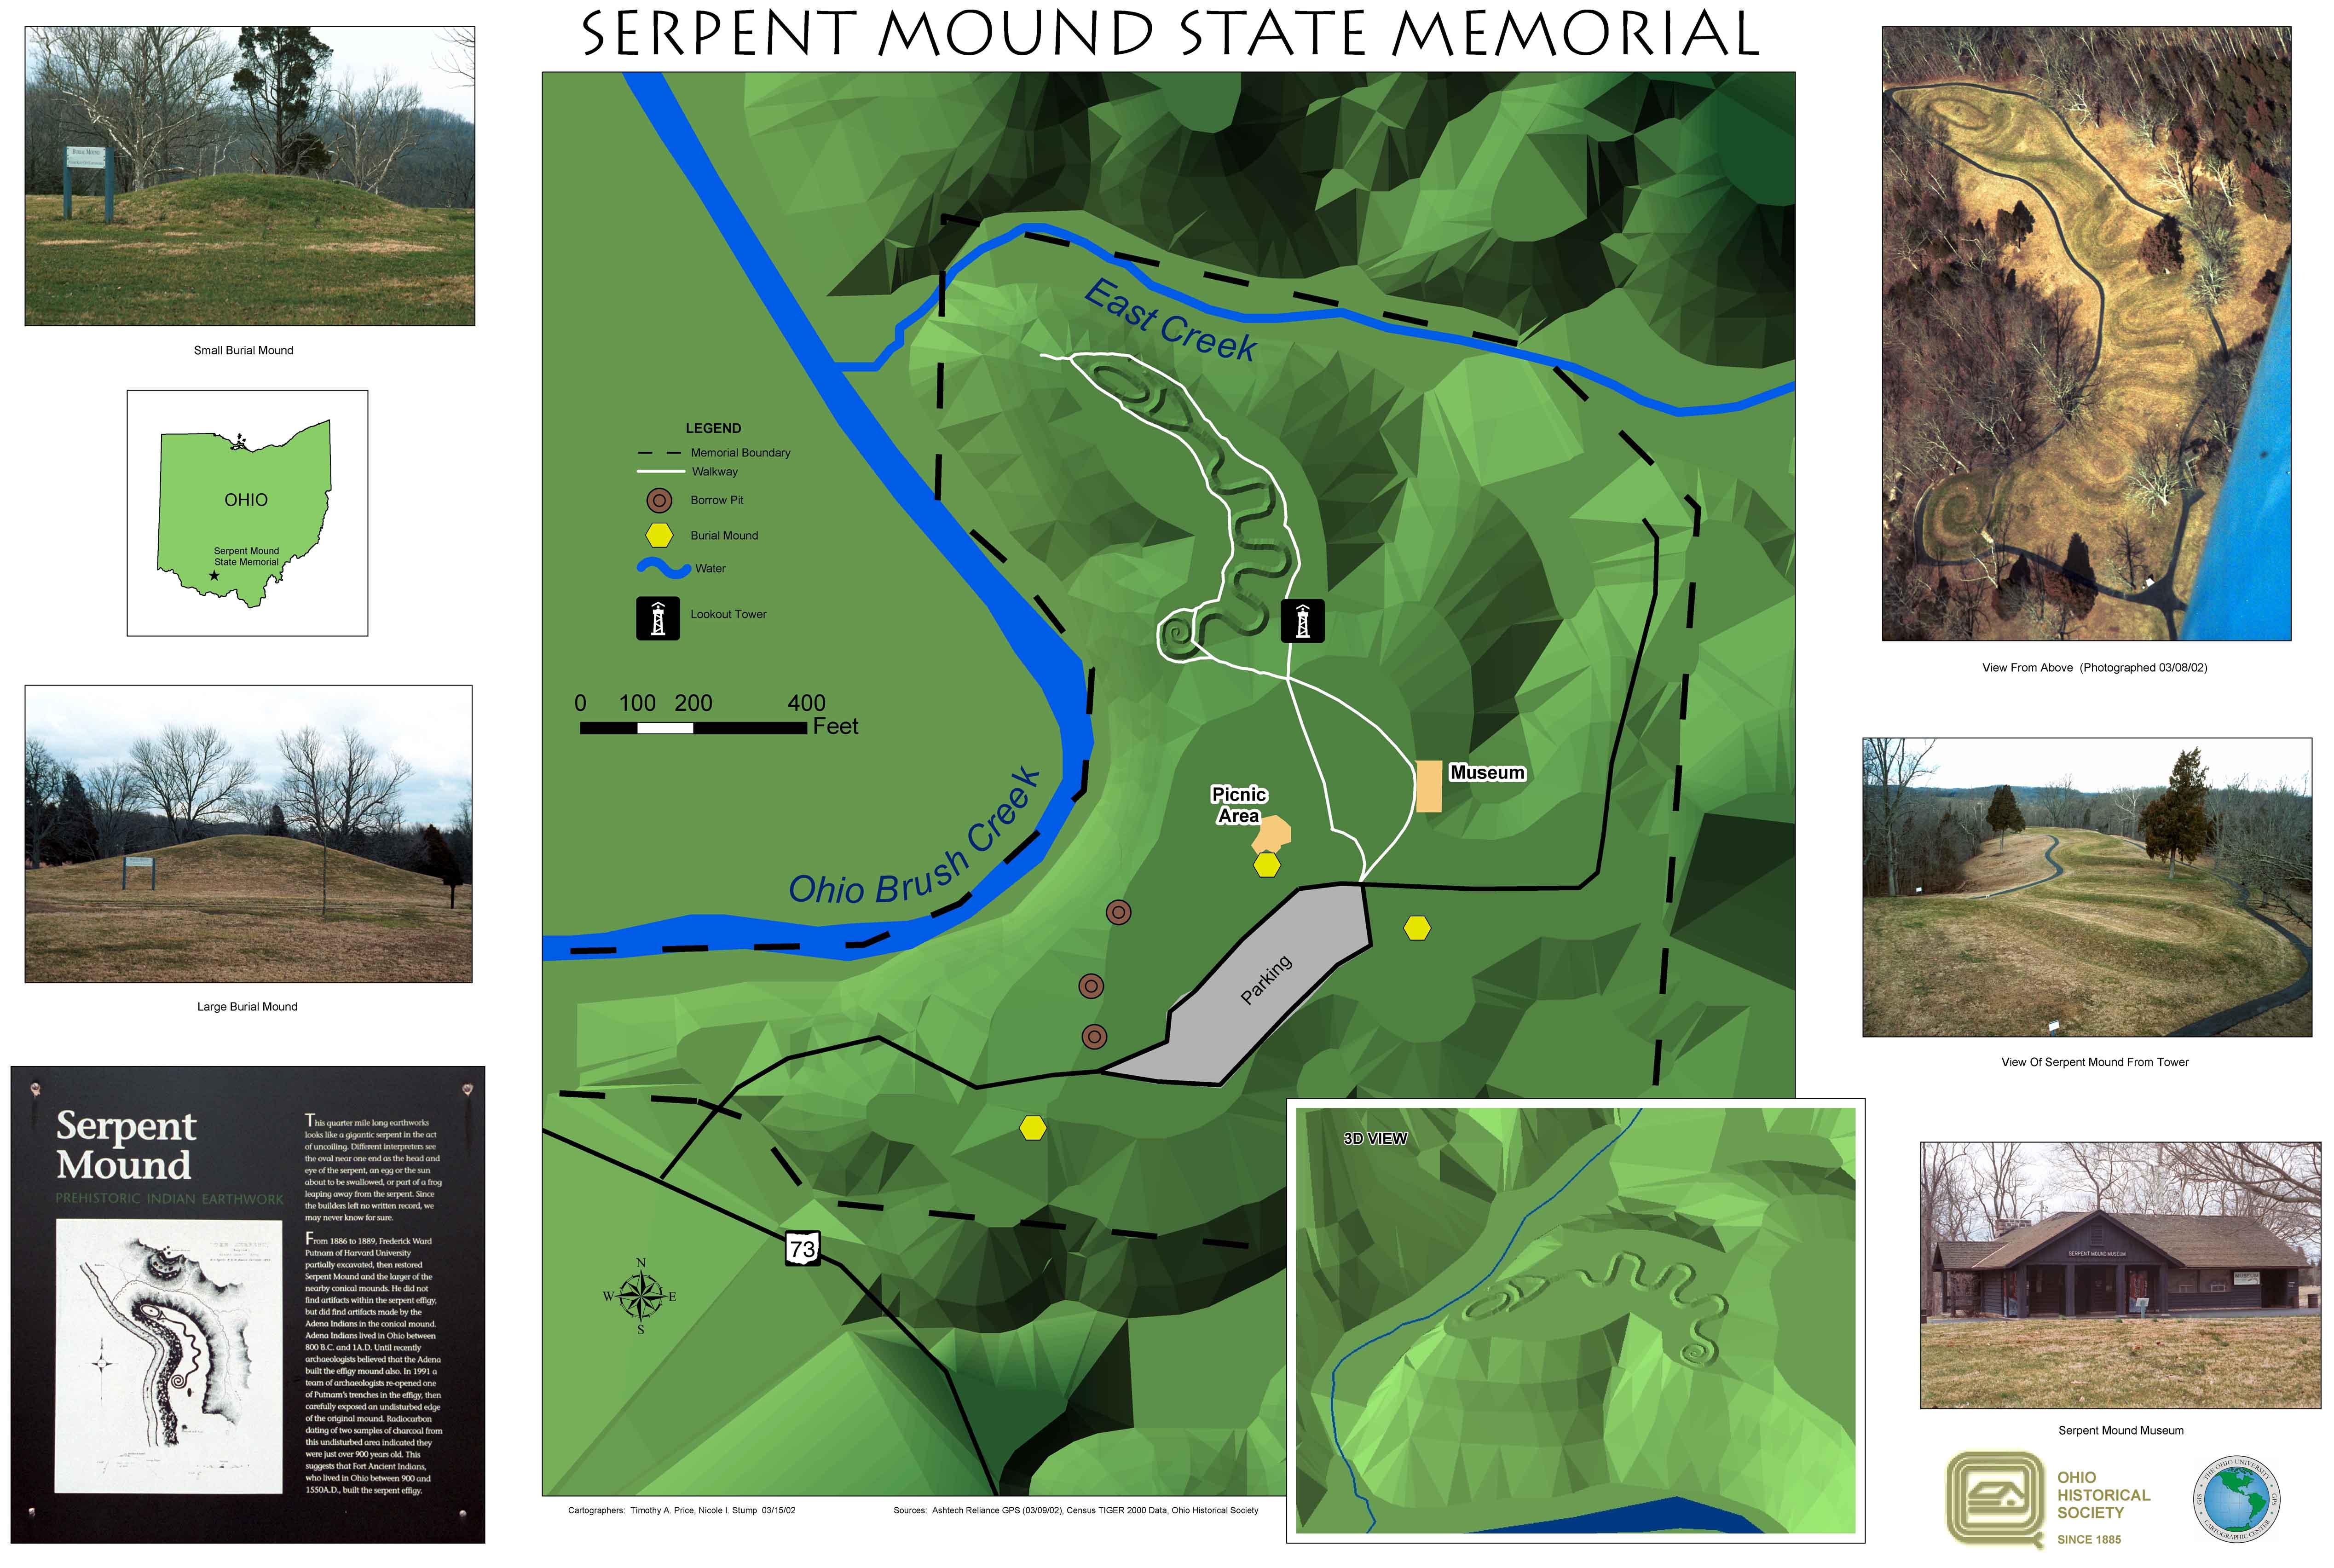 Vermes - Serpent Mound Ohio 2